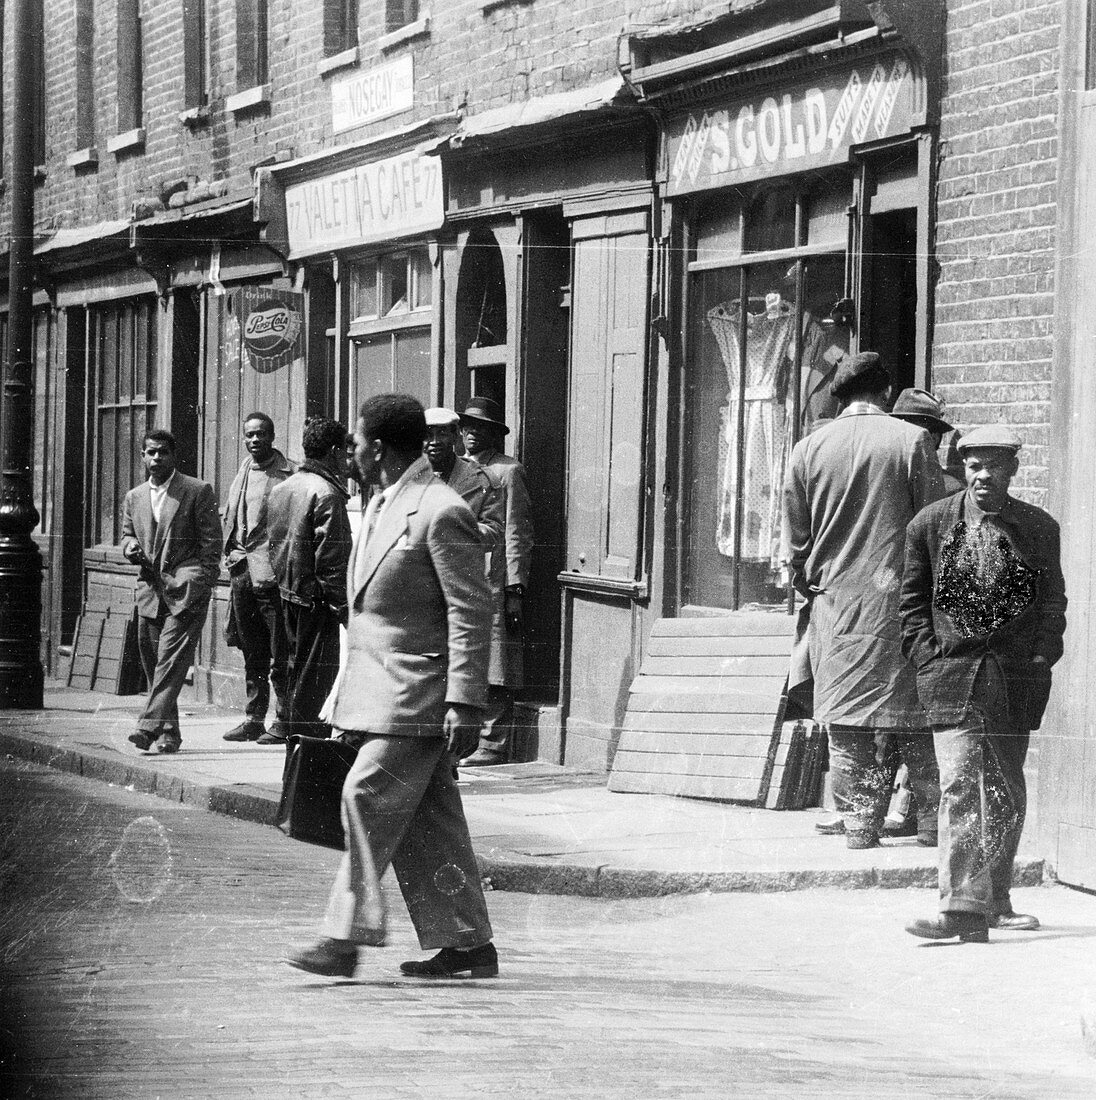 Notting Hill, London, 1940s